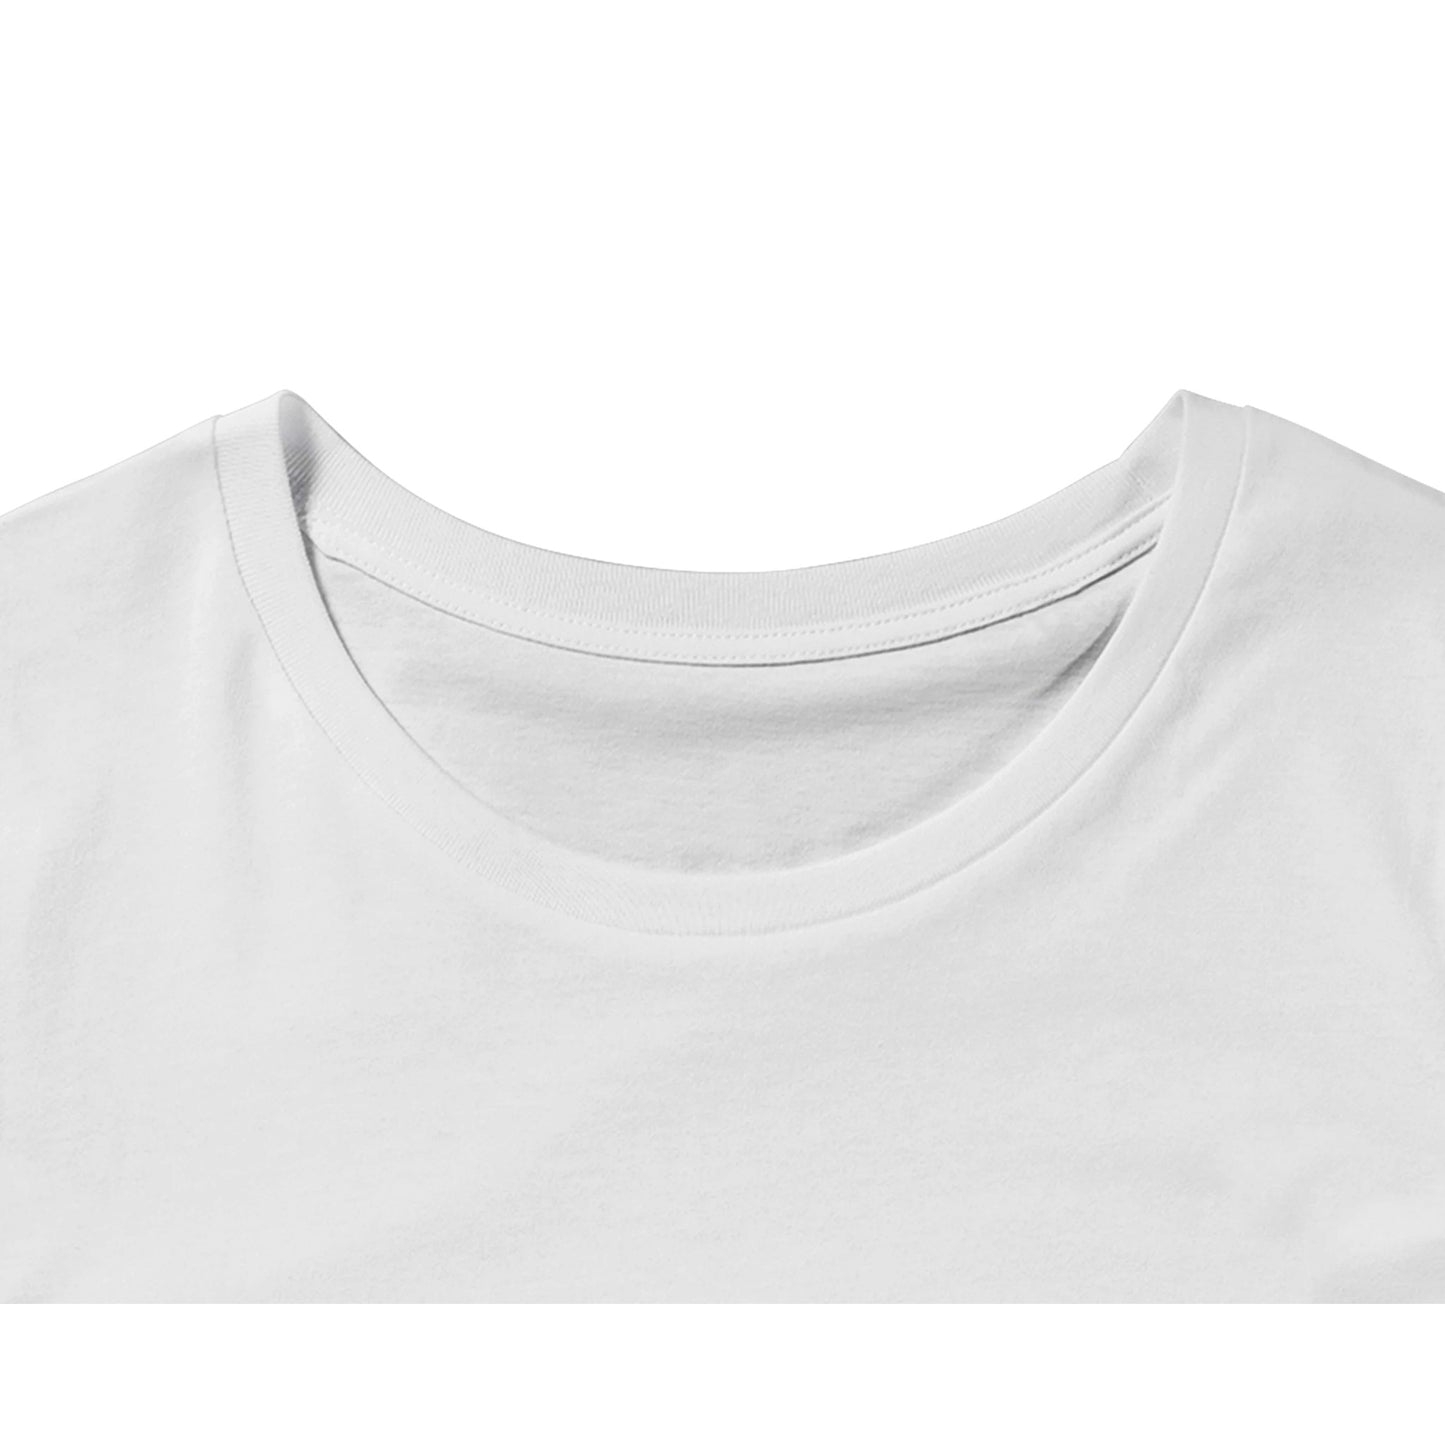 100% Organic Unisex T-shirt